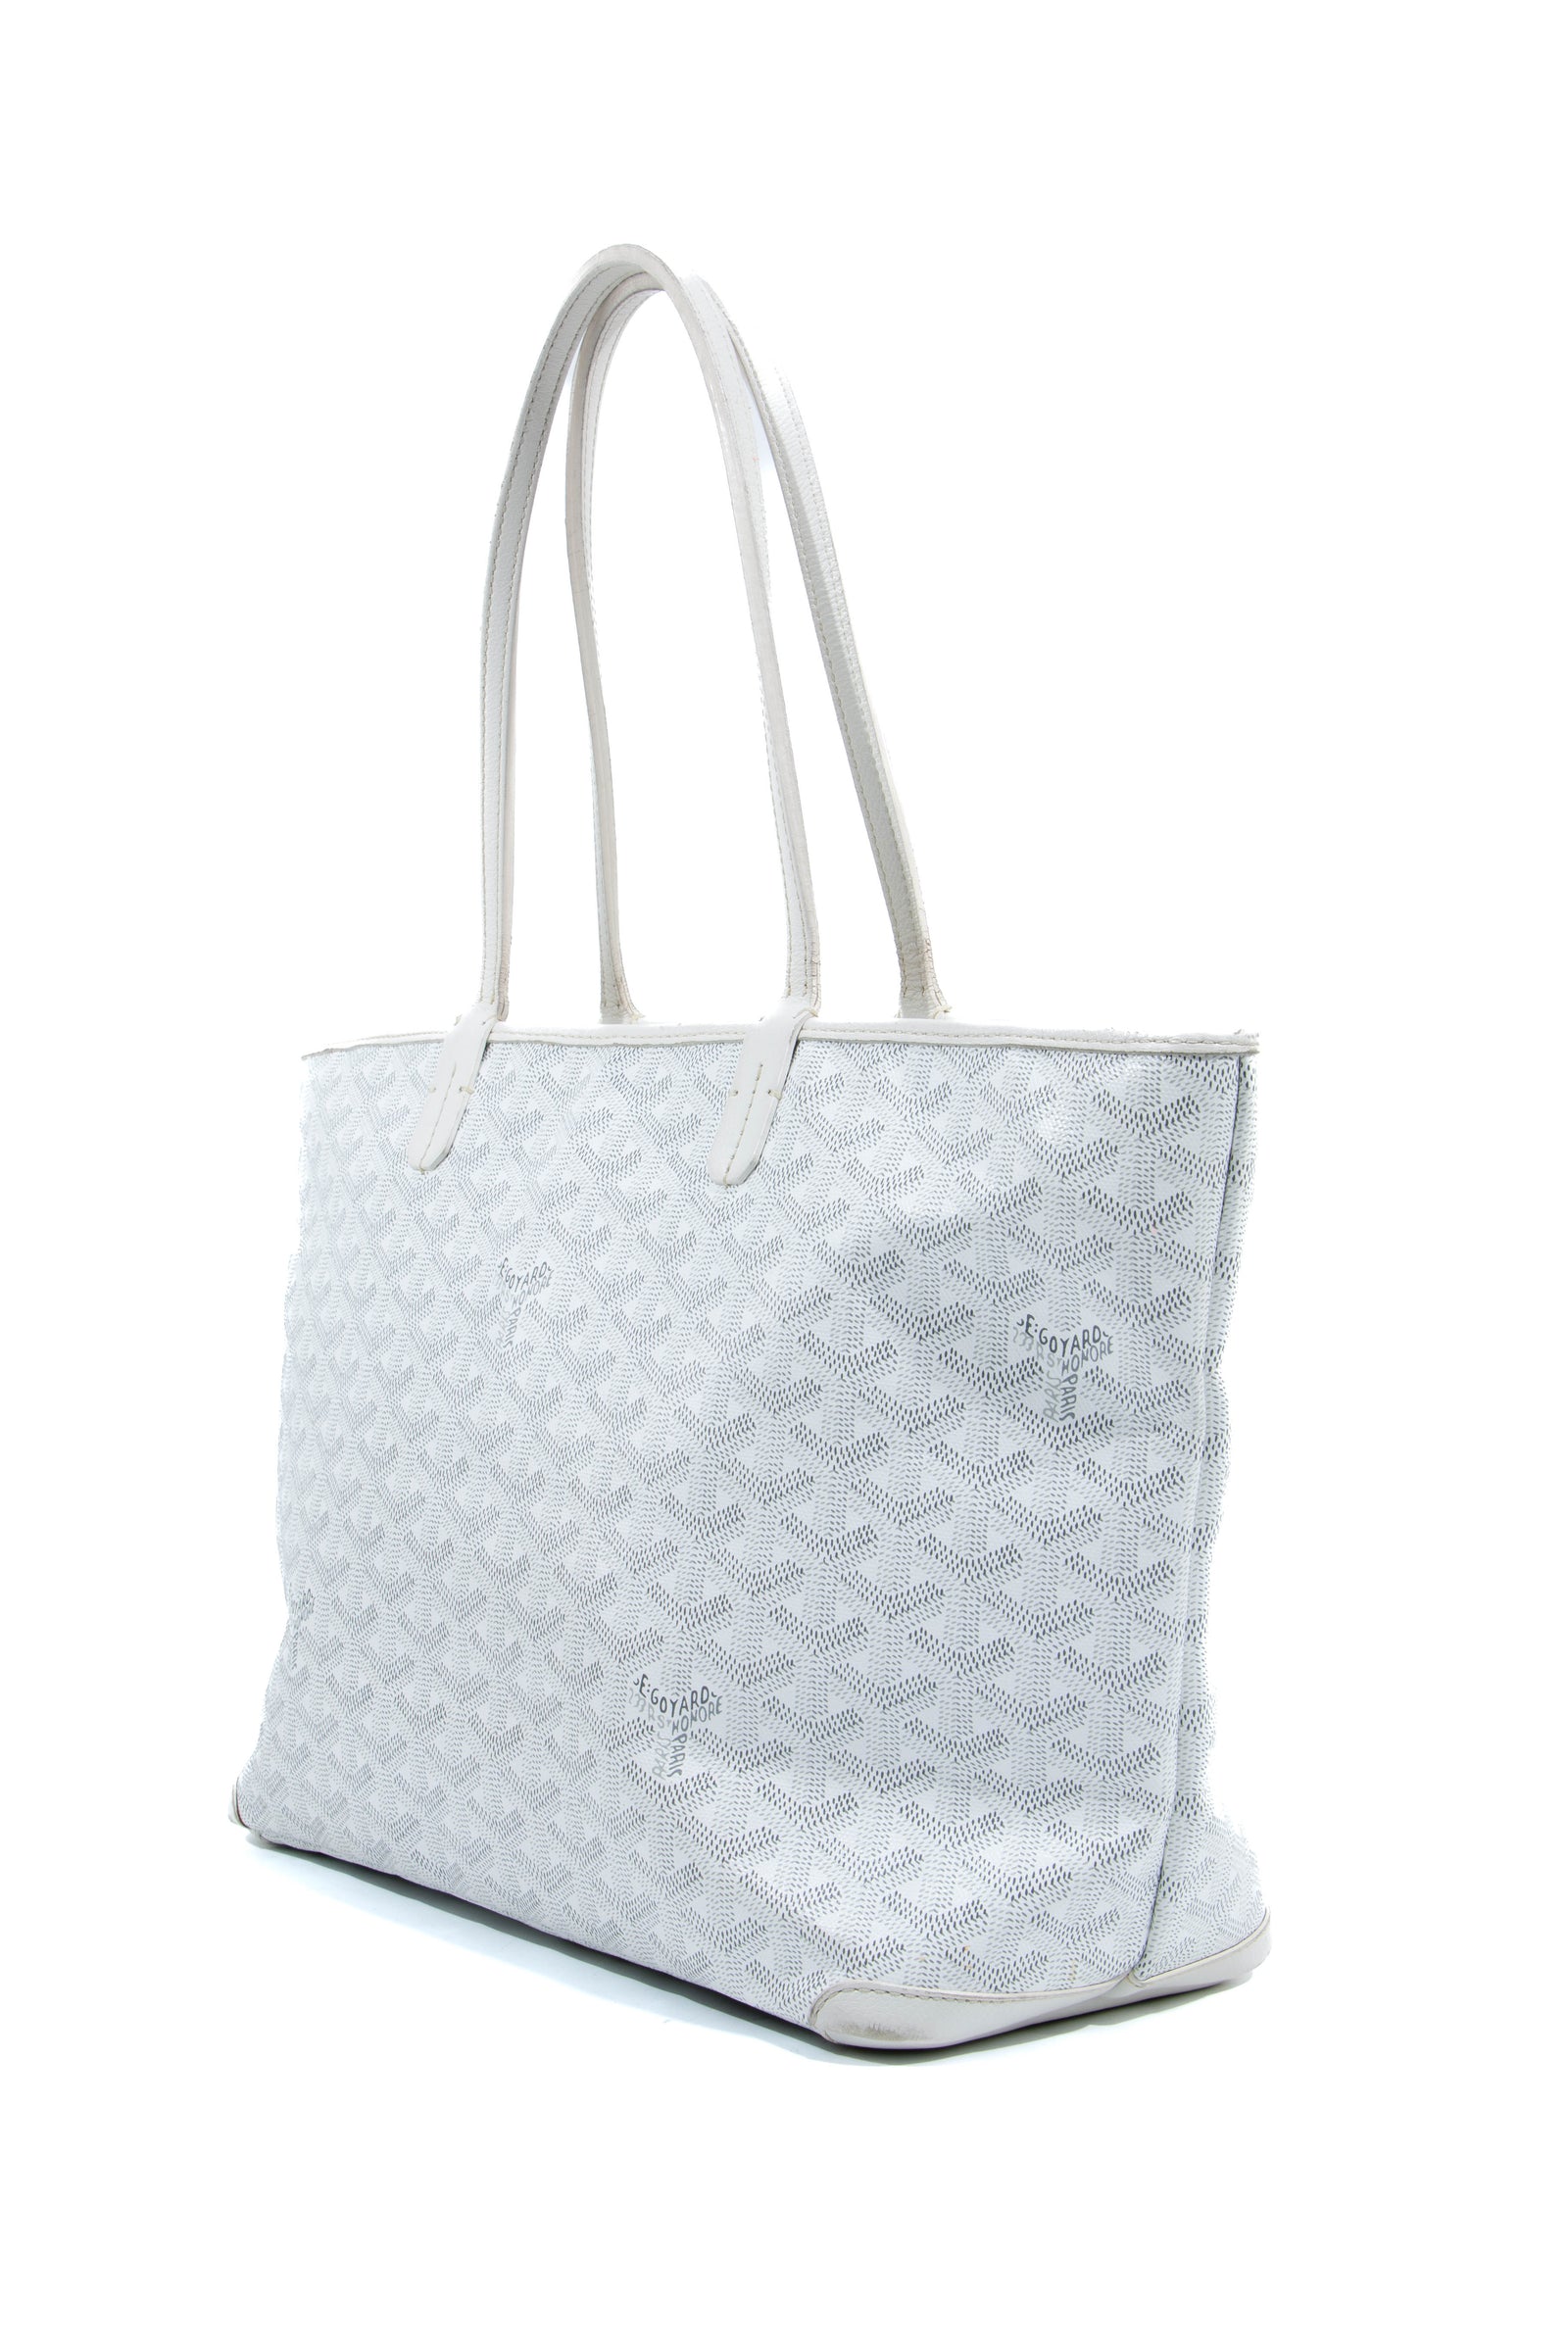 Glam Deluxe - Brand New Goyard Saint Louis GM Bag Price: RM6,xxx